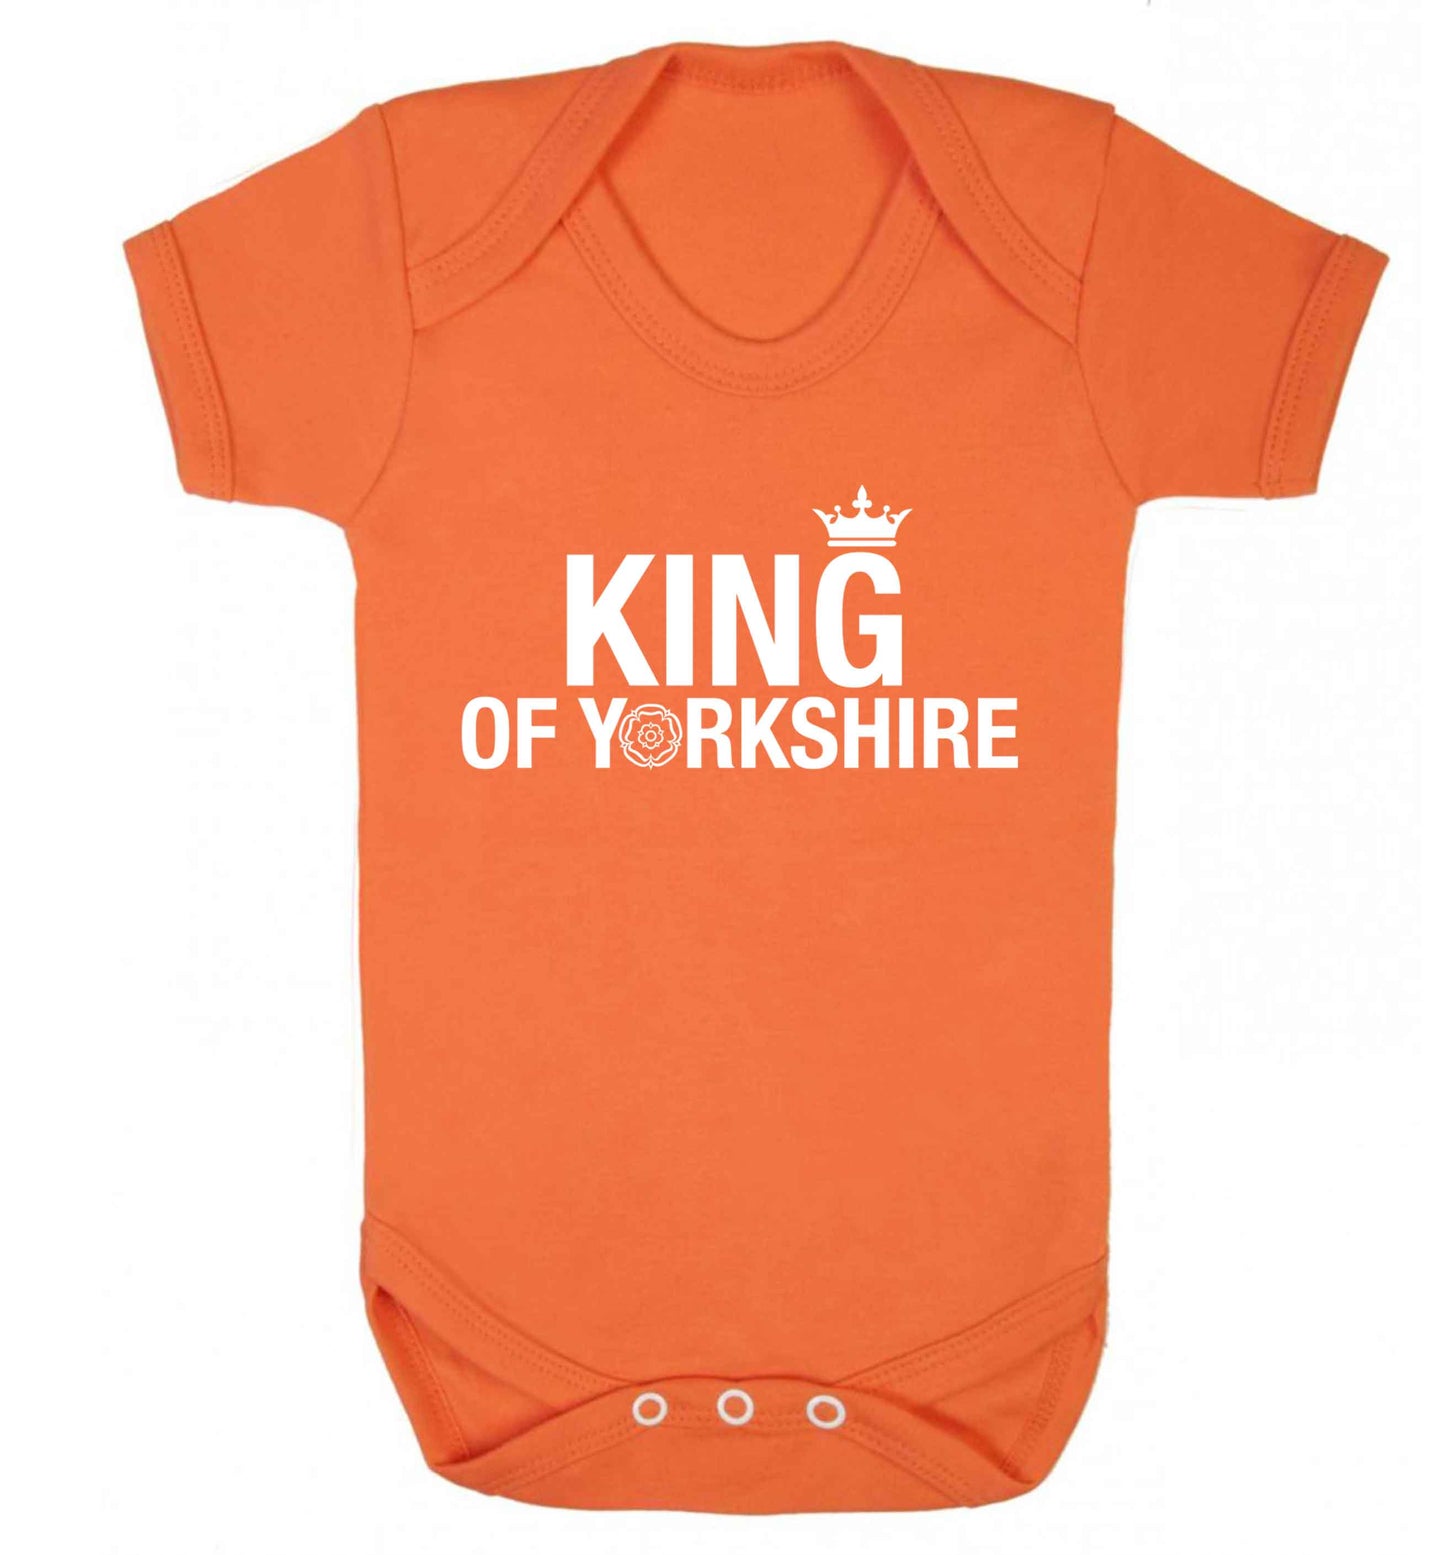 King of Yorkshire Baby Vest orange 18-24 months